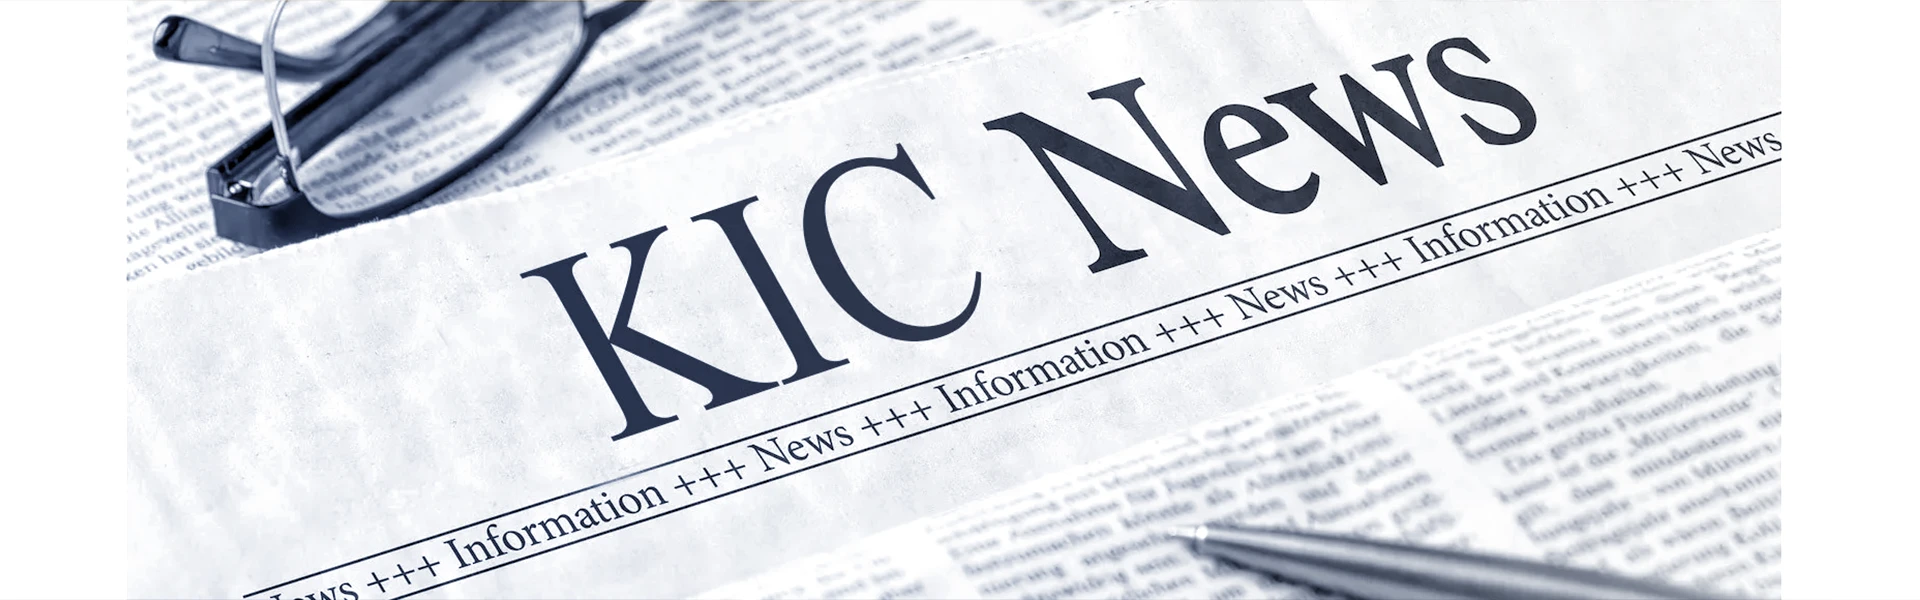 KICTeam News & Information